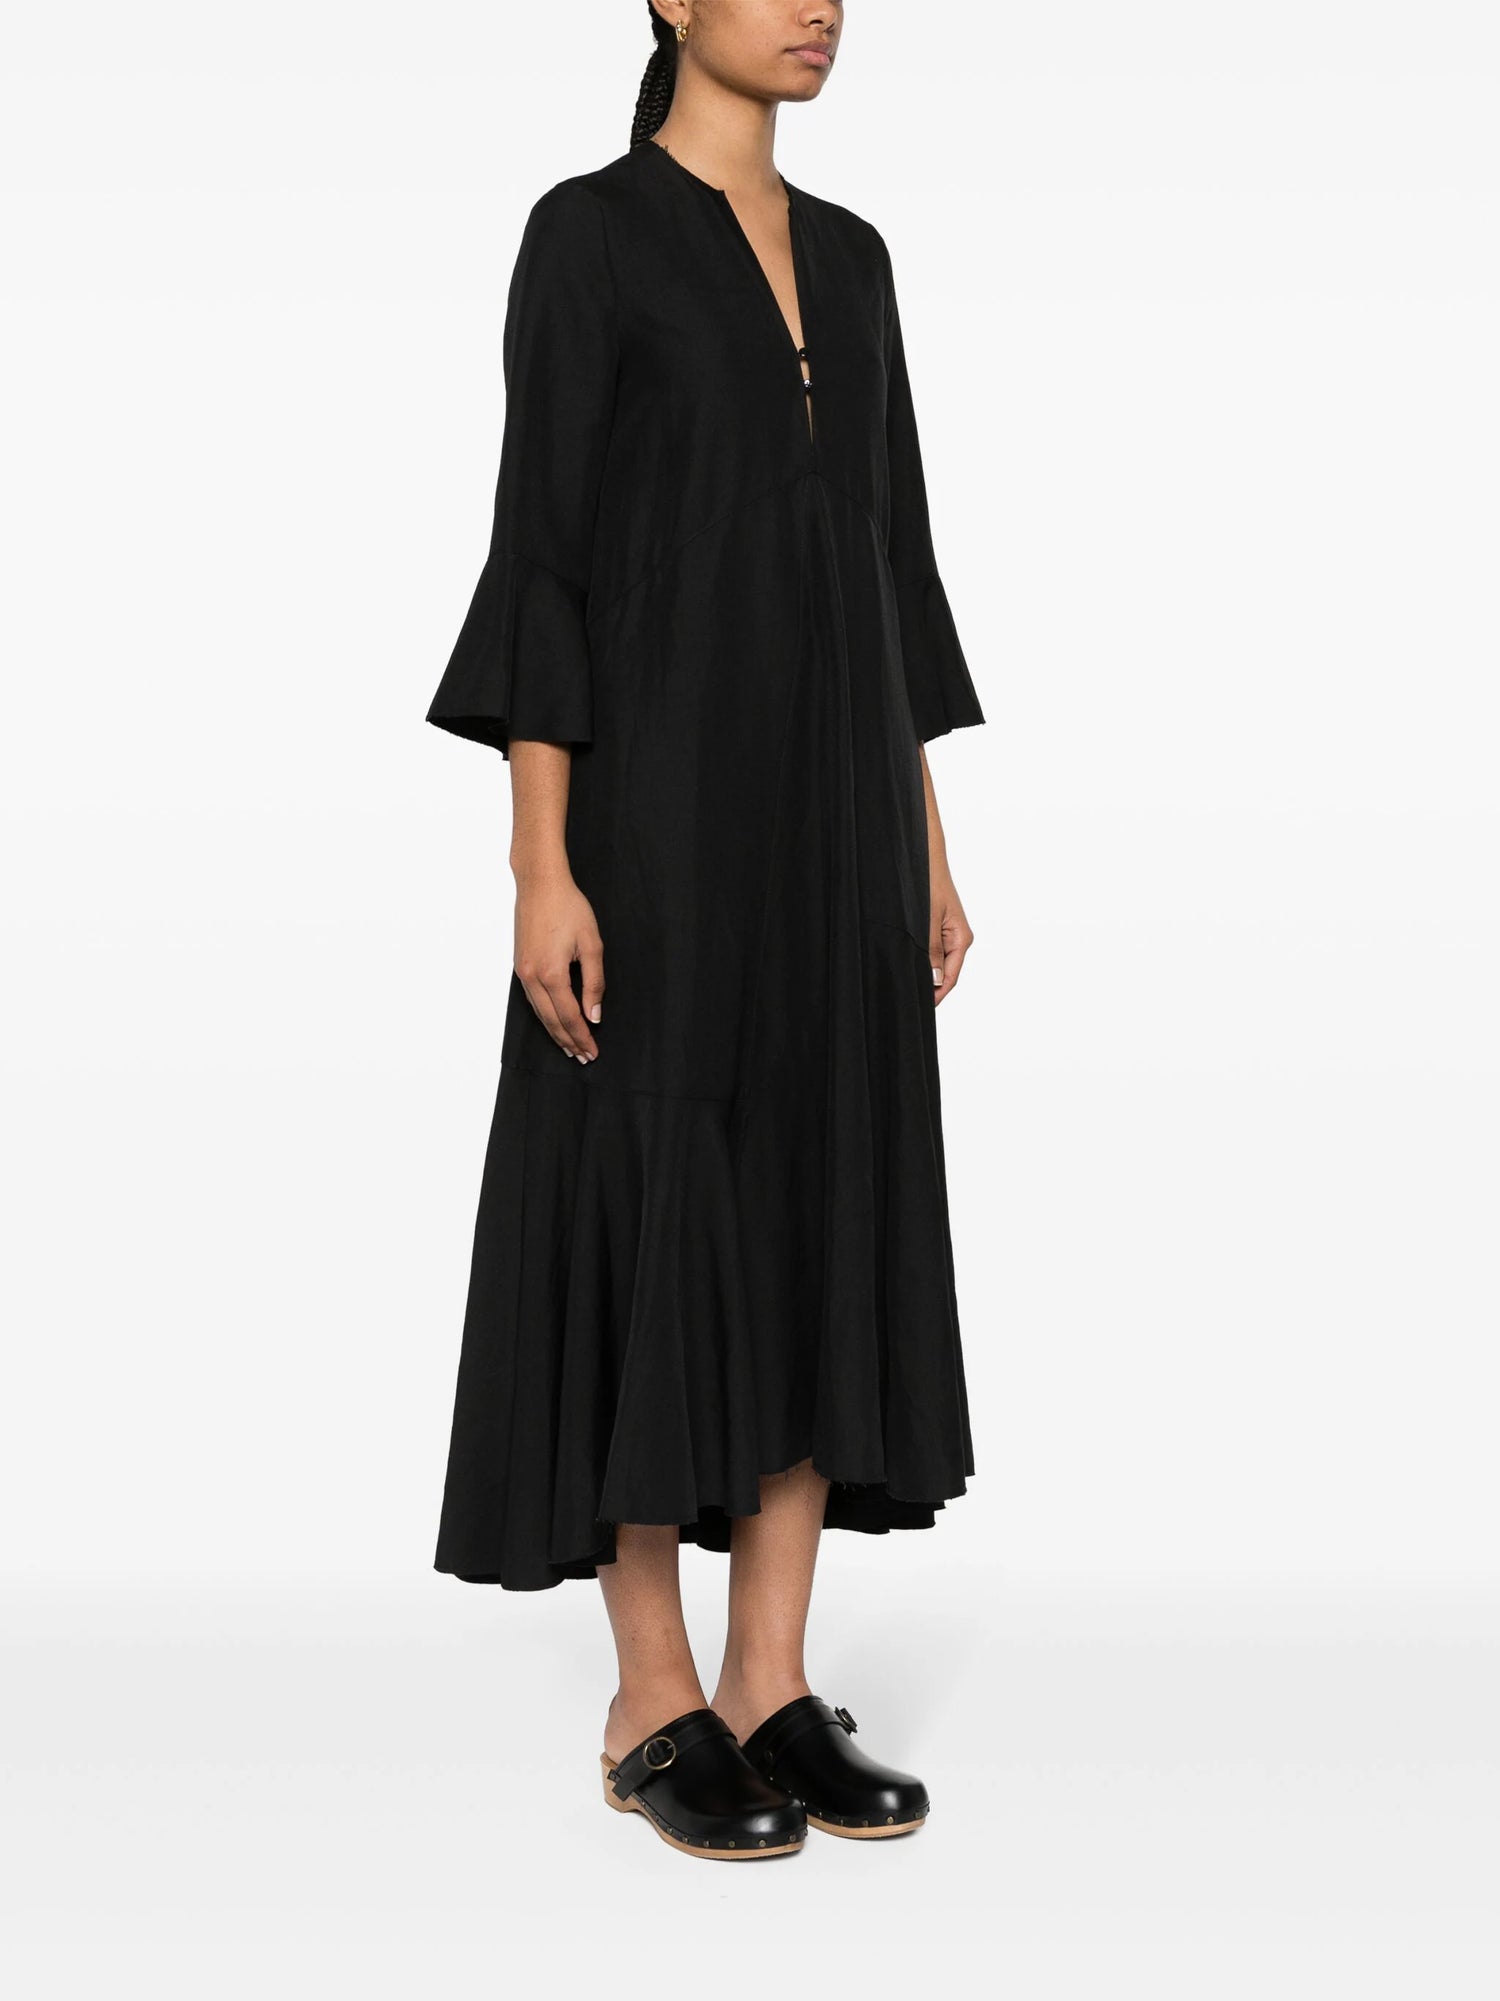 SUMMER CRUISE dress, black